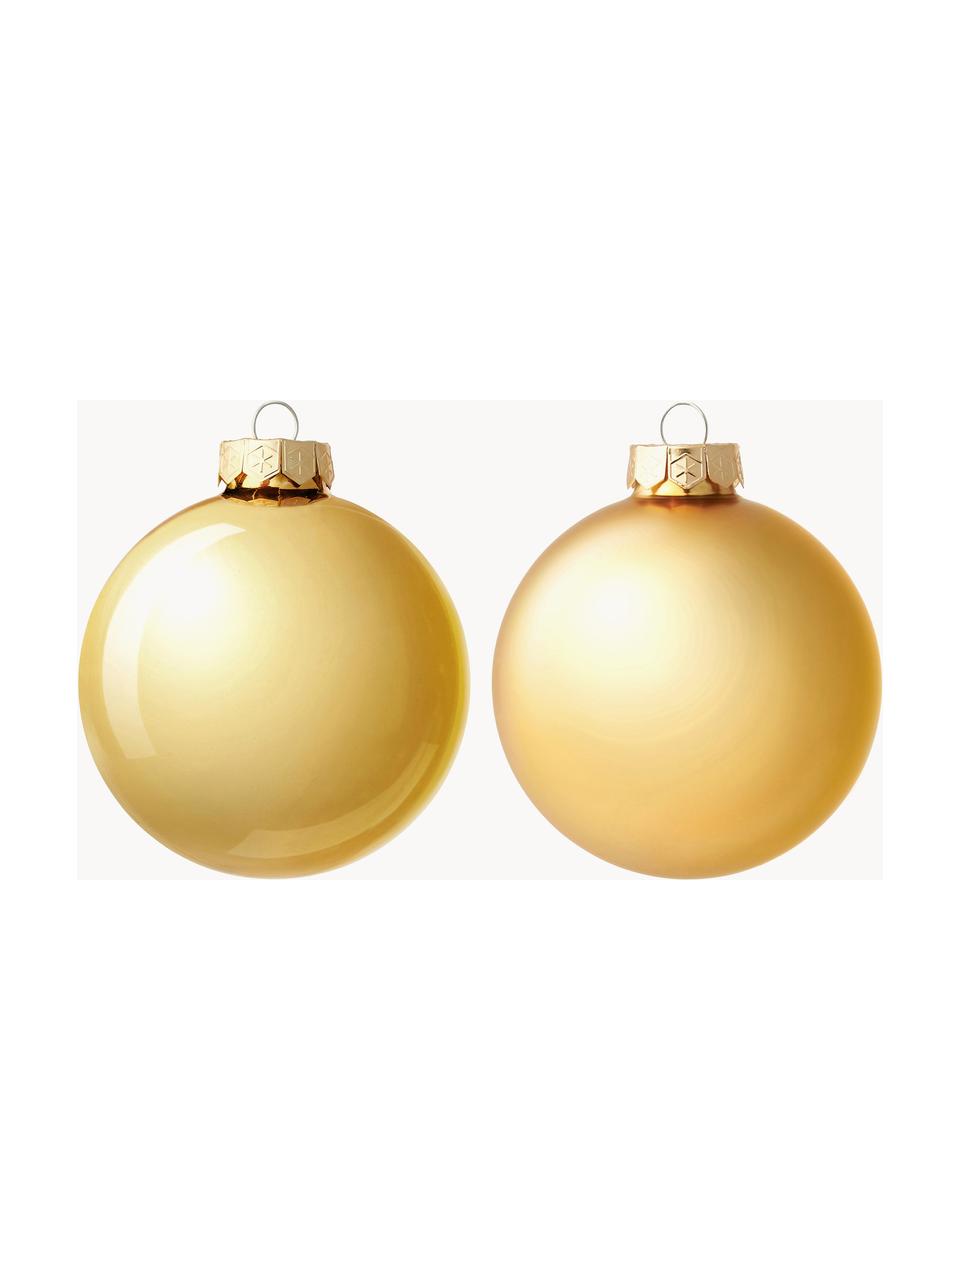 Bolas de Navidad Evergreen, tamaños diferentes, Dorado, Ø 8 cm, 6 uds.